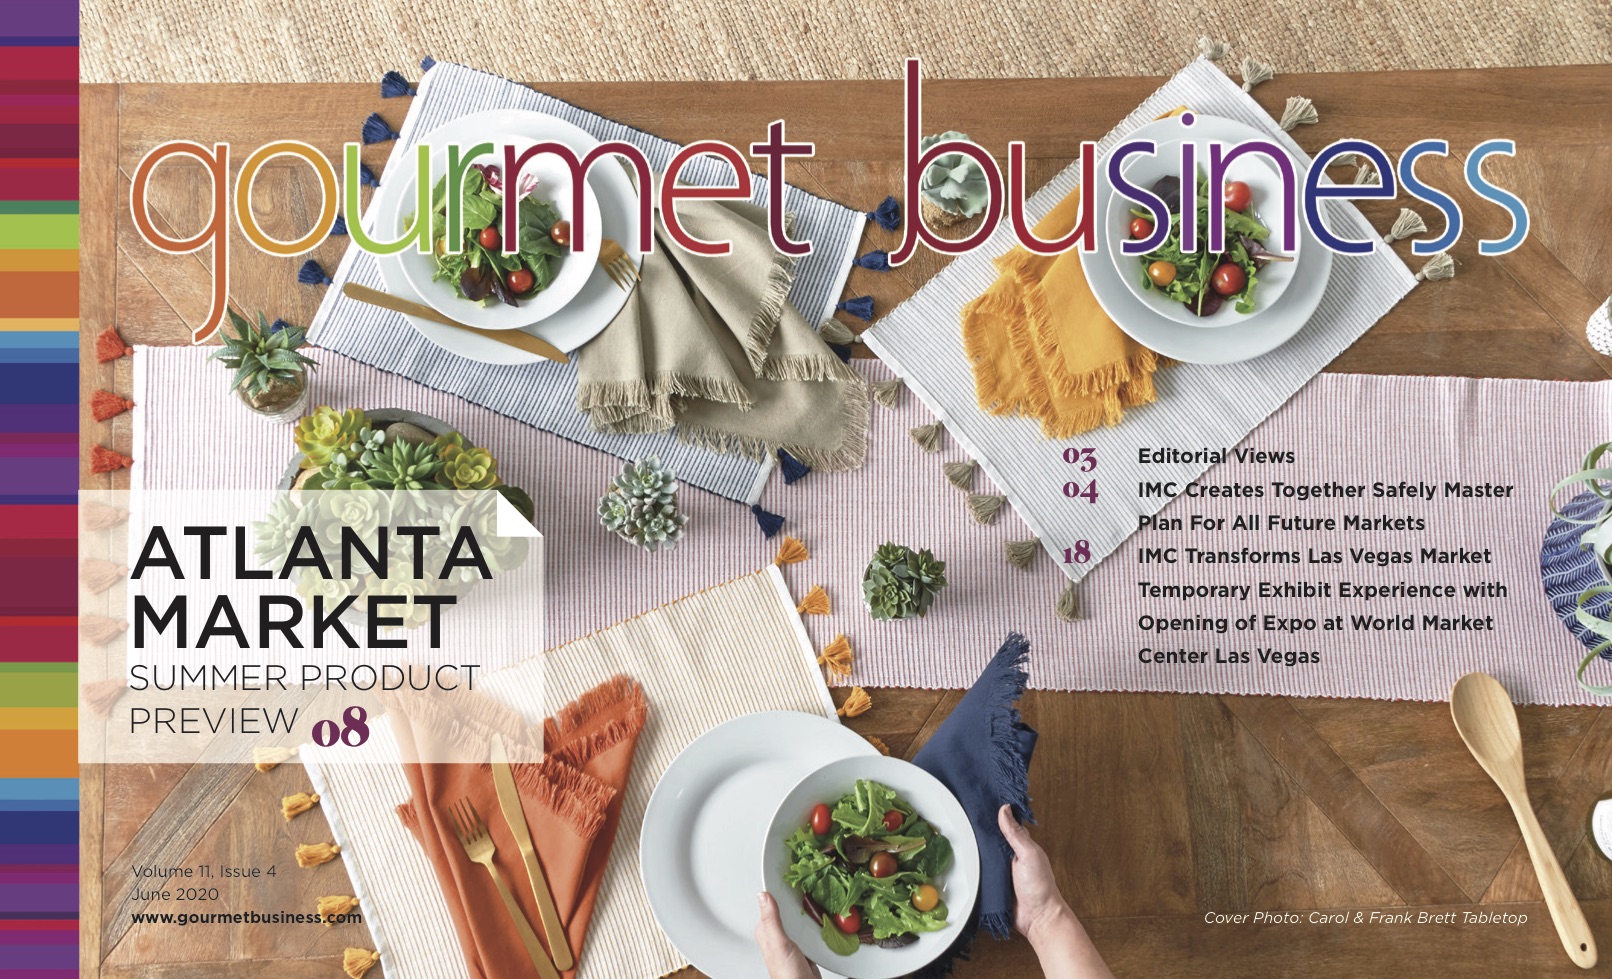 Gourmet Business June '20 - Atlanta Market Summer Preview